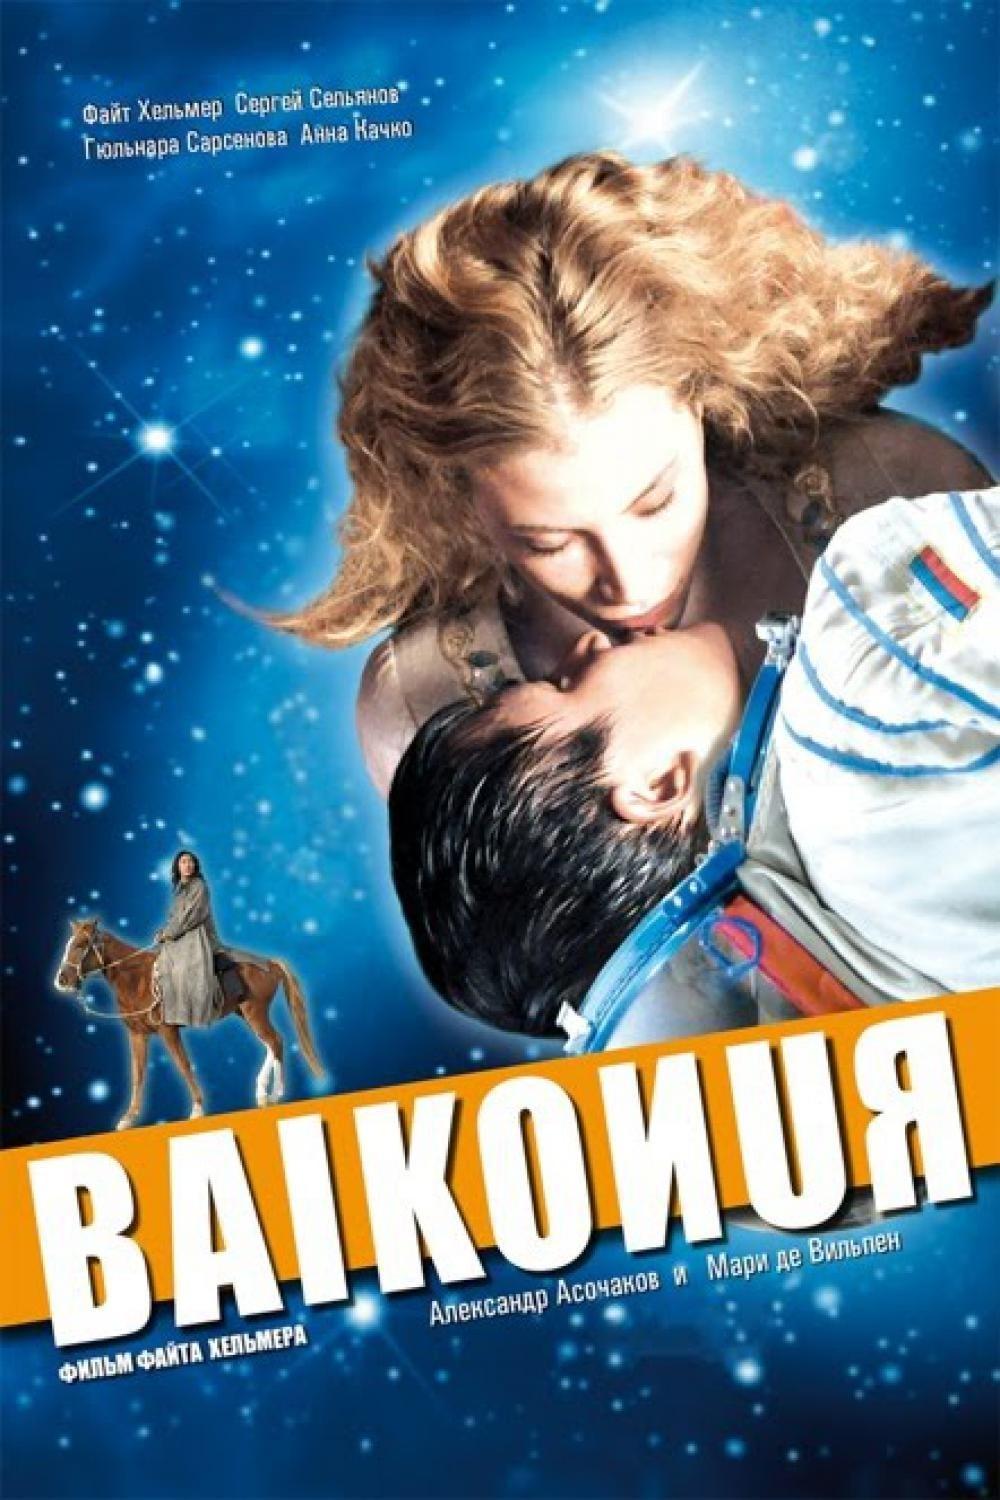 Baikonur poster